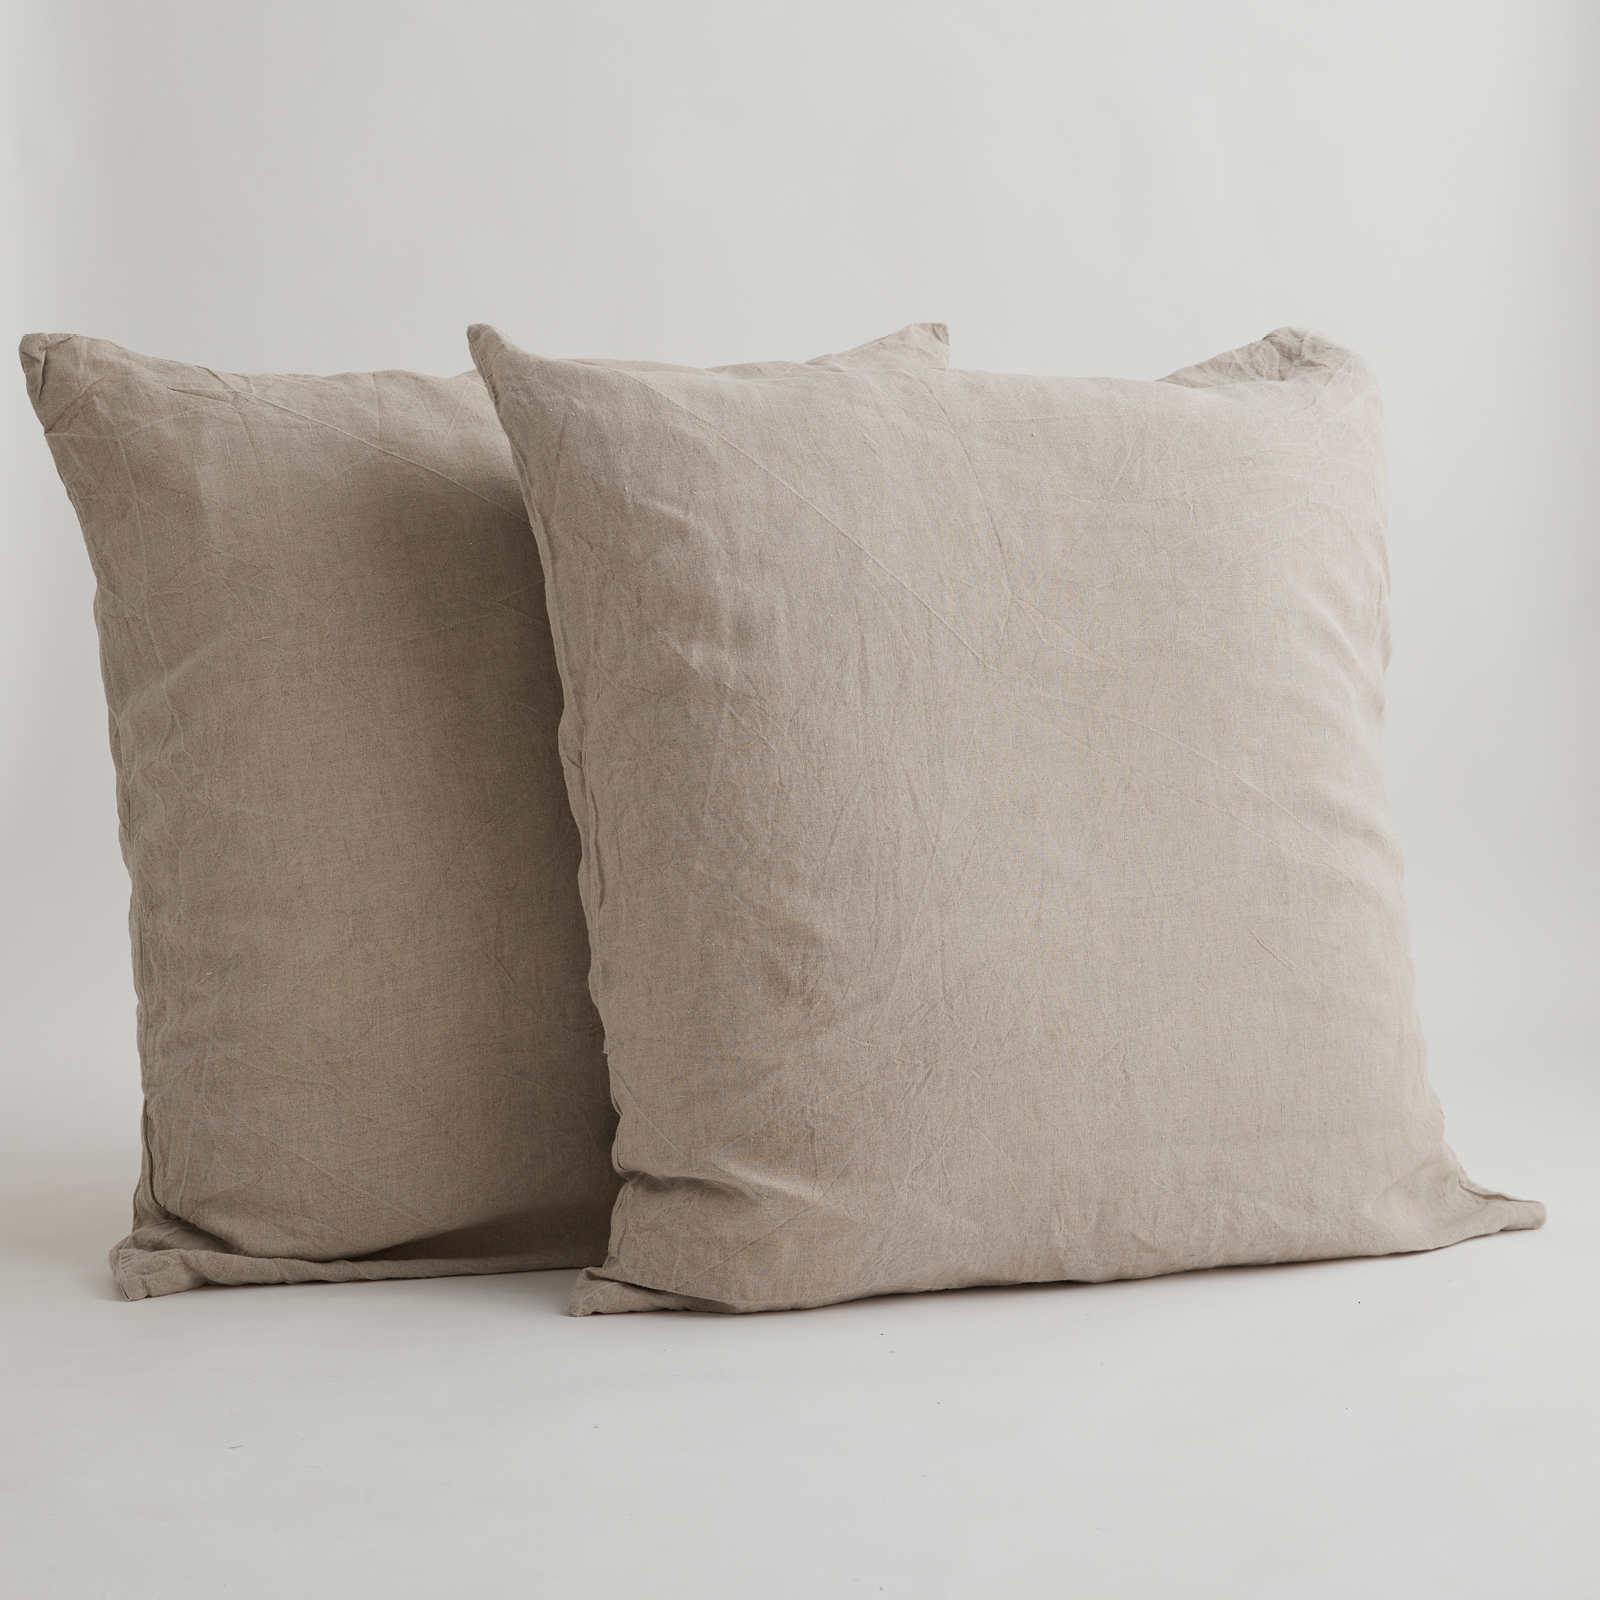 100% Pure Linen European Pillowcase Set in Natural (2)